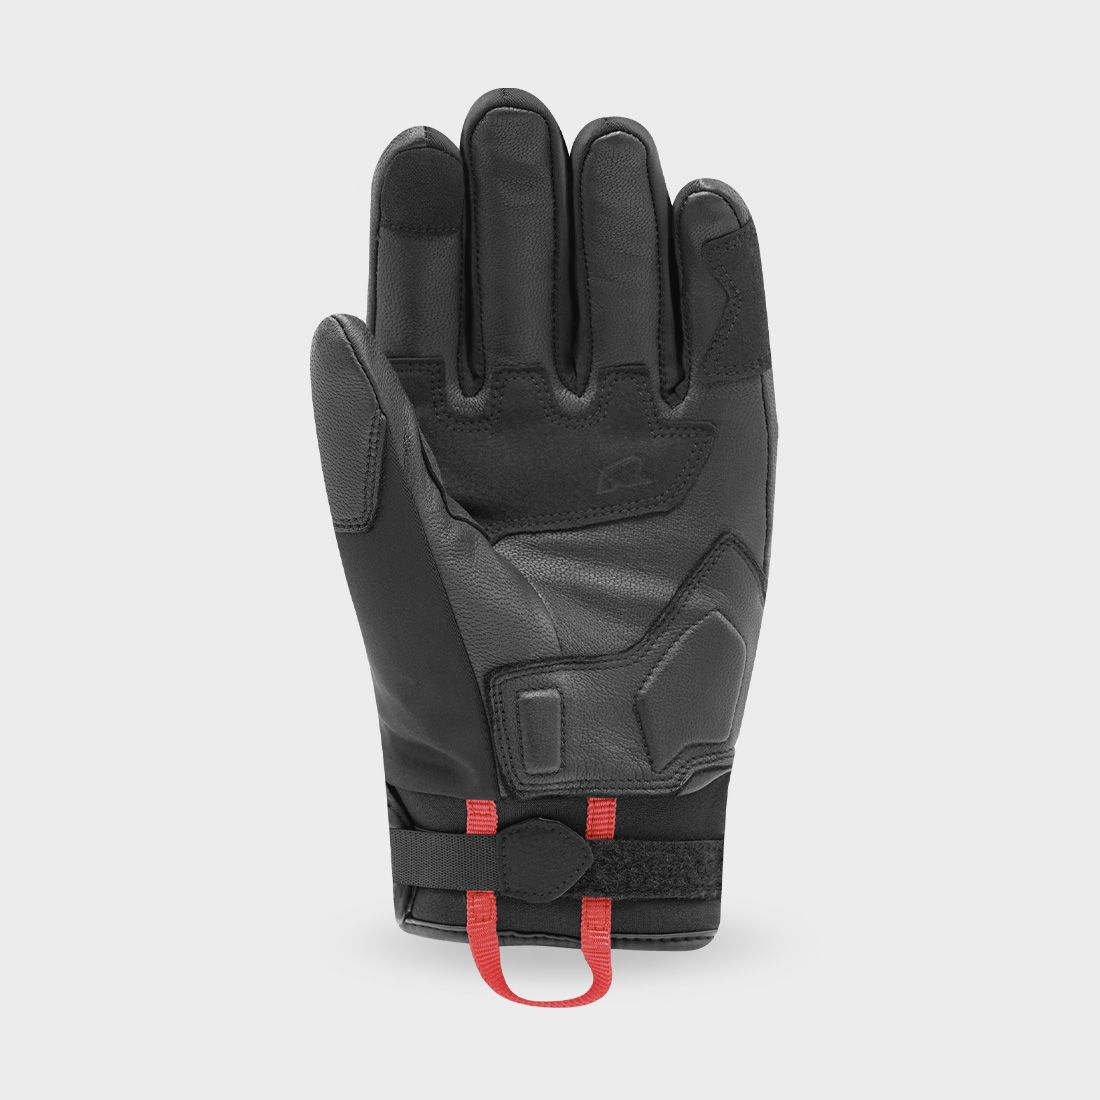 RONIN WINTER - Winter racer glove